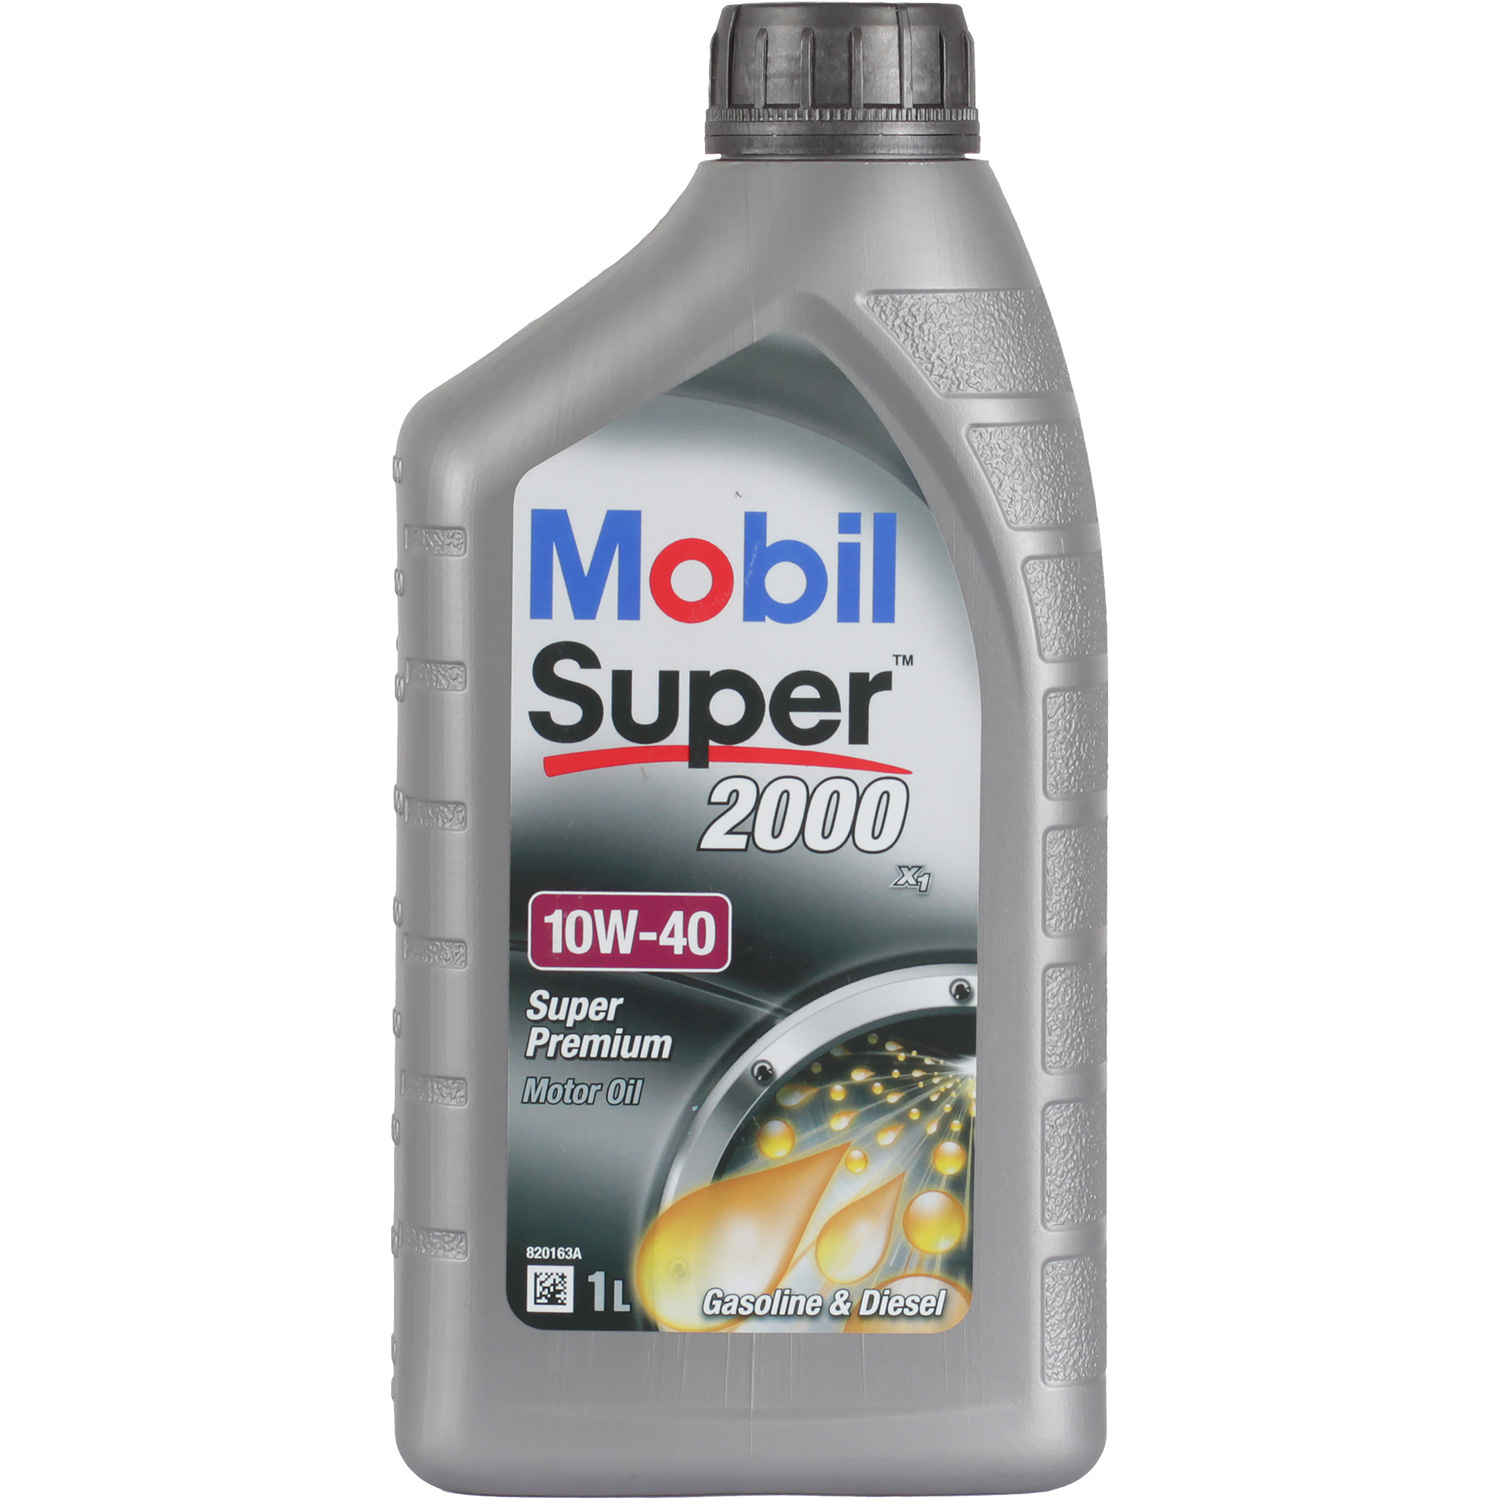 Mobil Моторное масло Mobil Super 2000 X1 10W-40, 1 л mobil моторное масло mobil super 3000 x1 5w 40 4 л